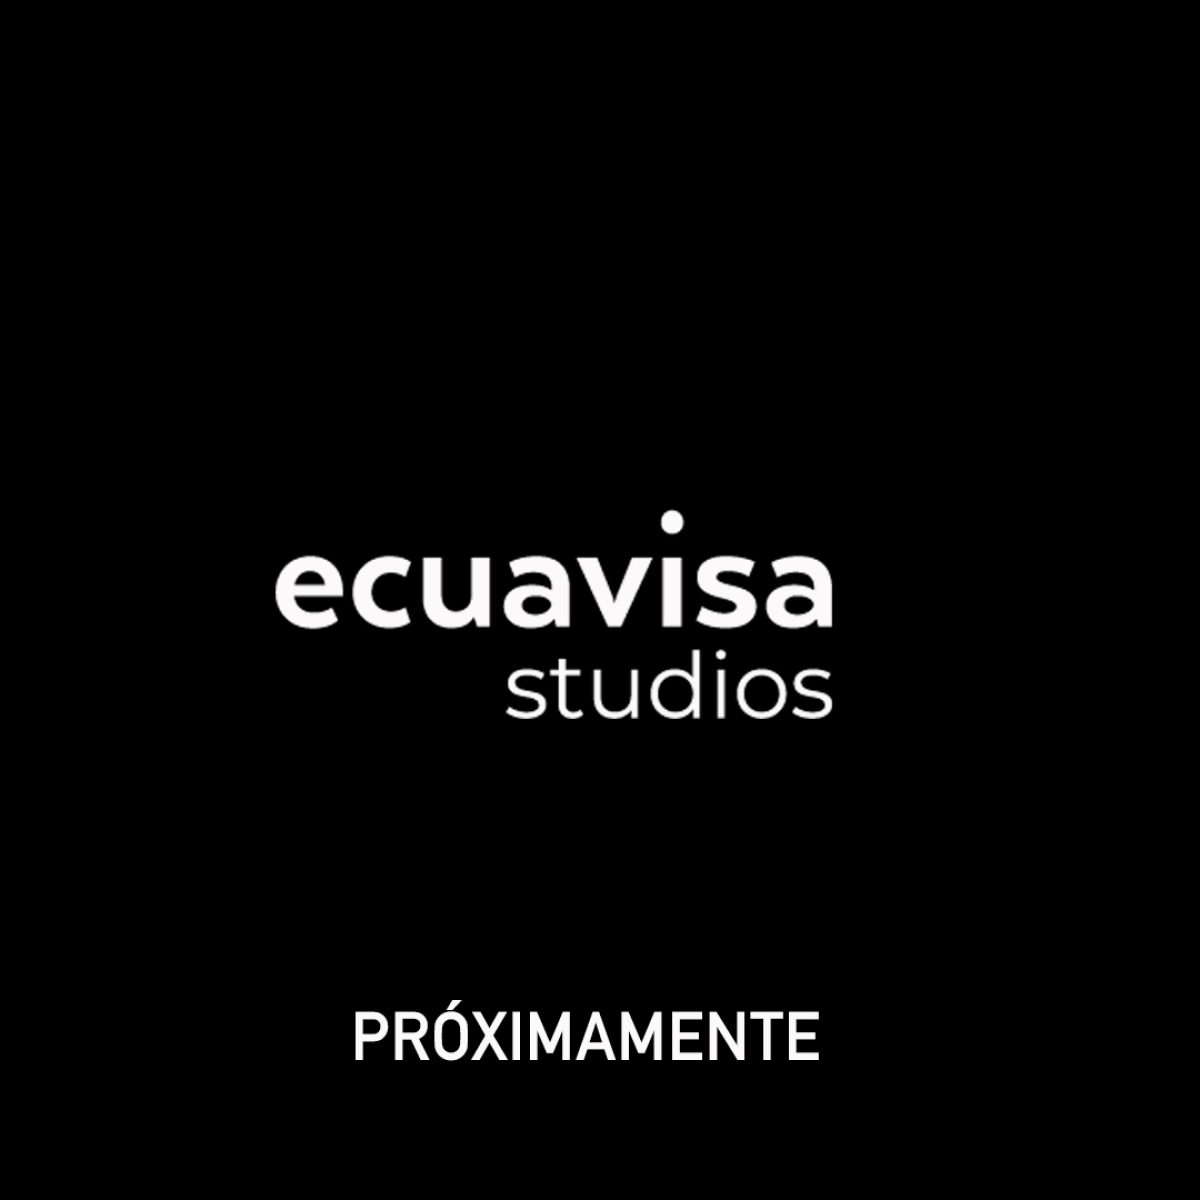 PROXIMAMENTE_ECUAVISA